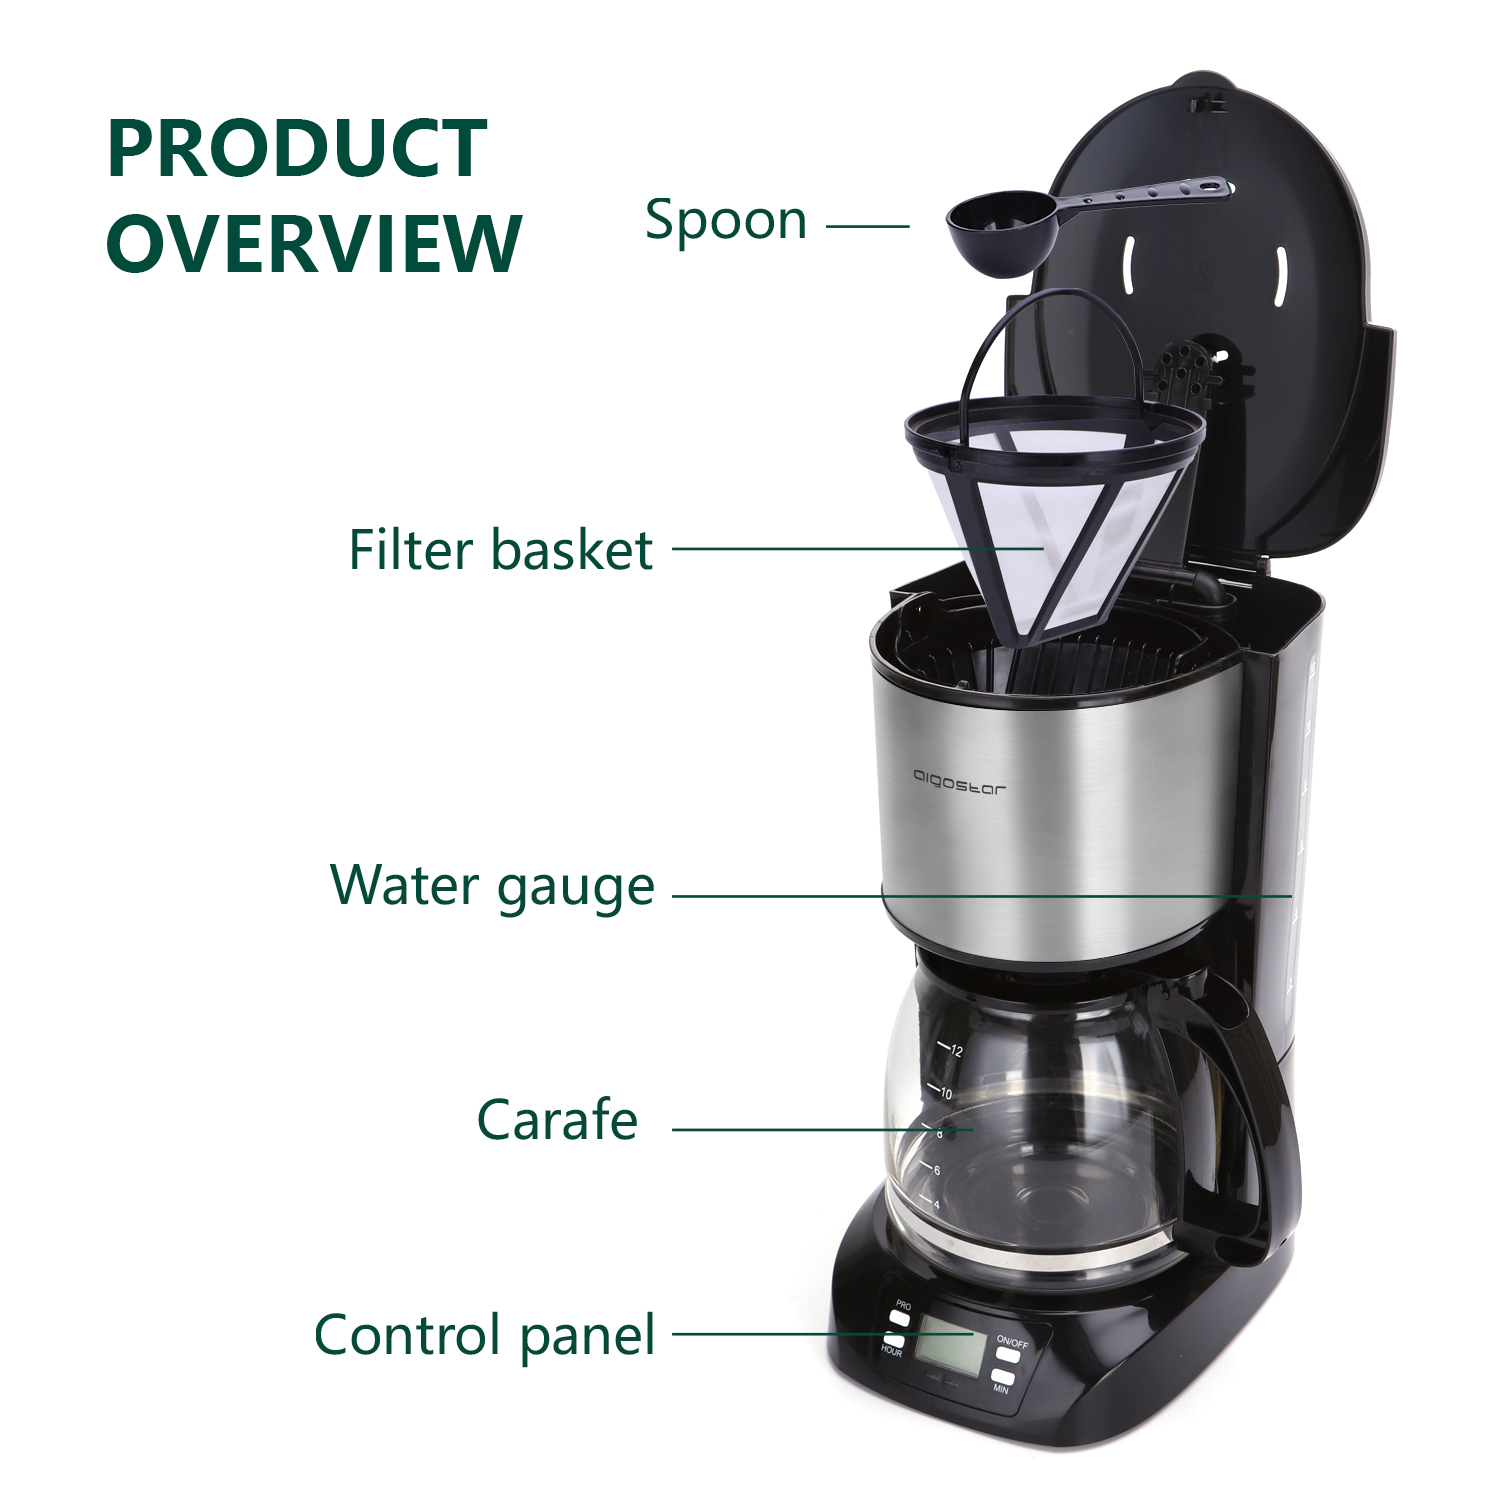 Aigostar Benno 30QUJ - Filter-Koffiezetapparaat/koffiezetapparaat filterkoffie - Zwart